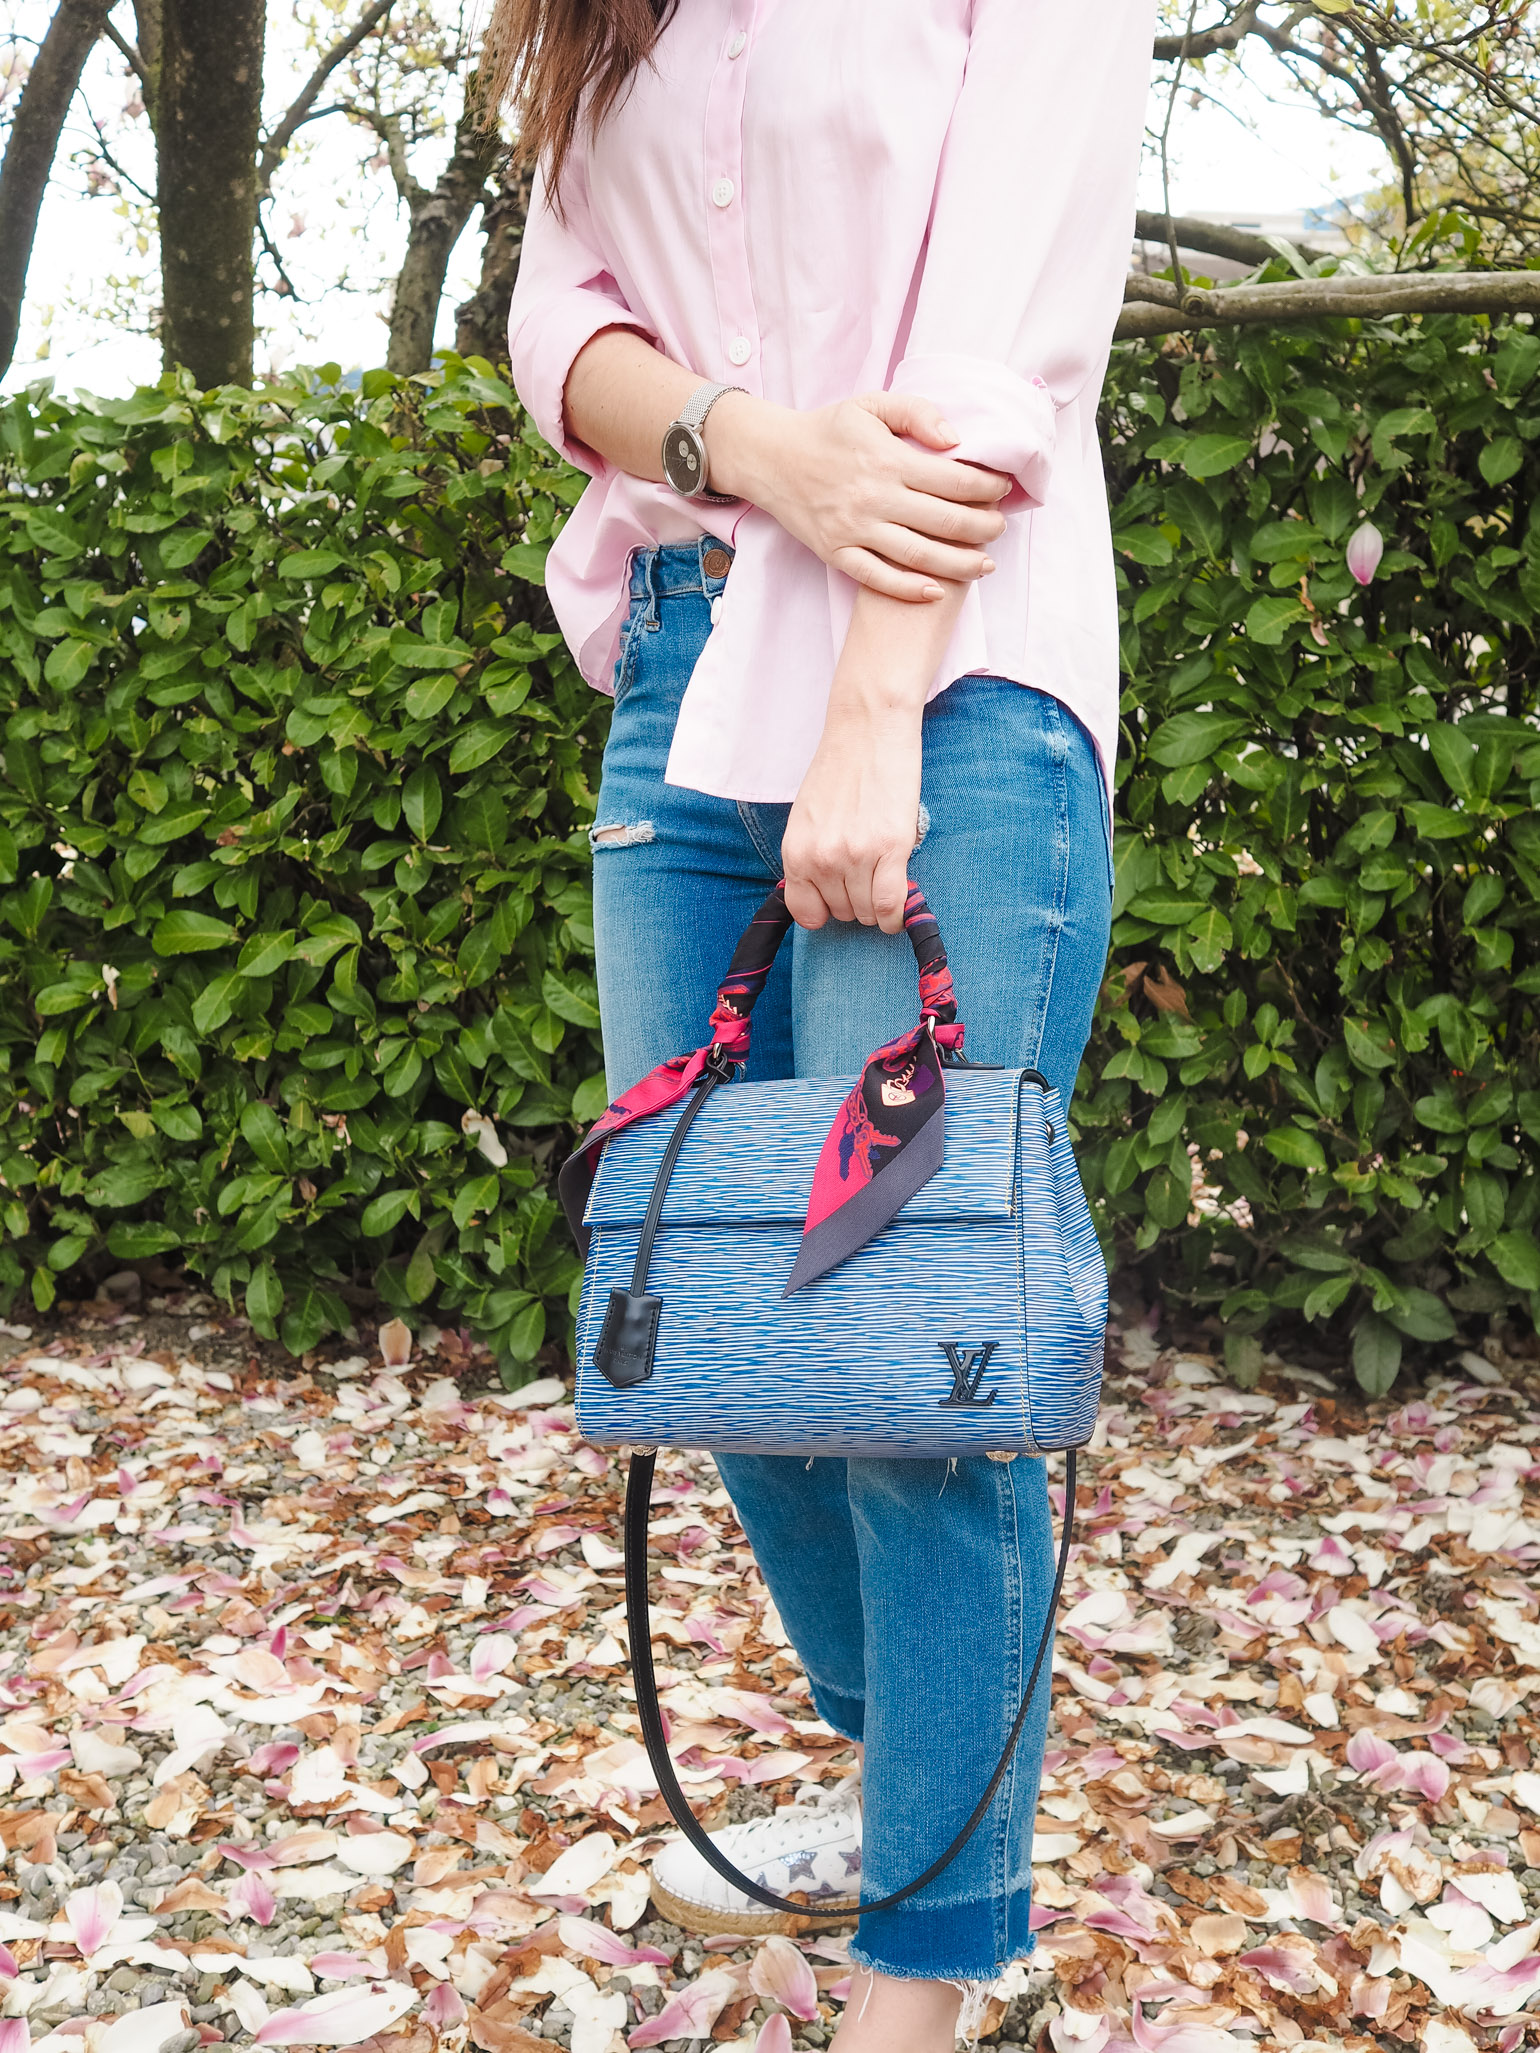 Handbag Review: Dolce & Gabbana Miss Sicily - The Brunette Nomad